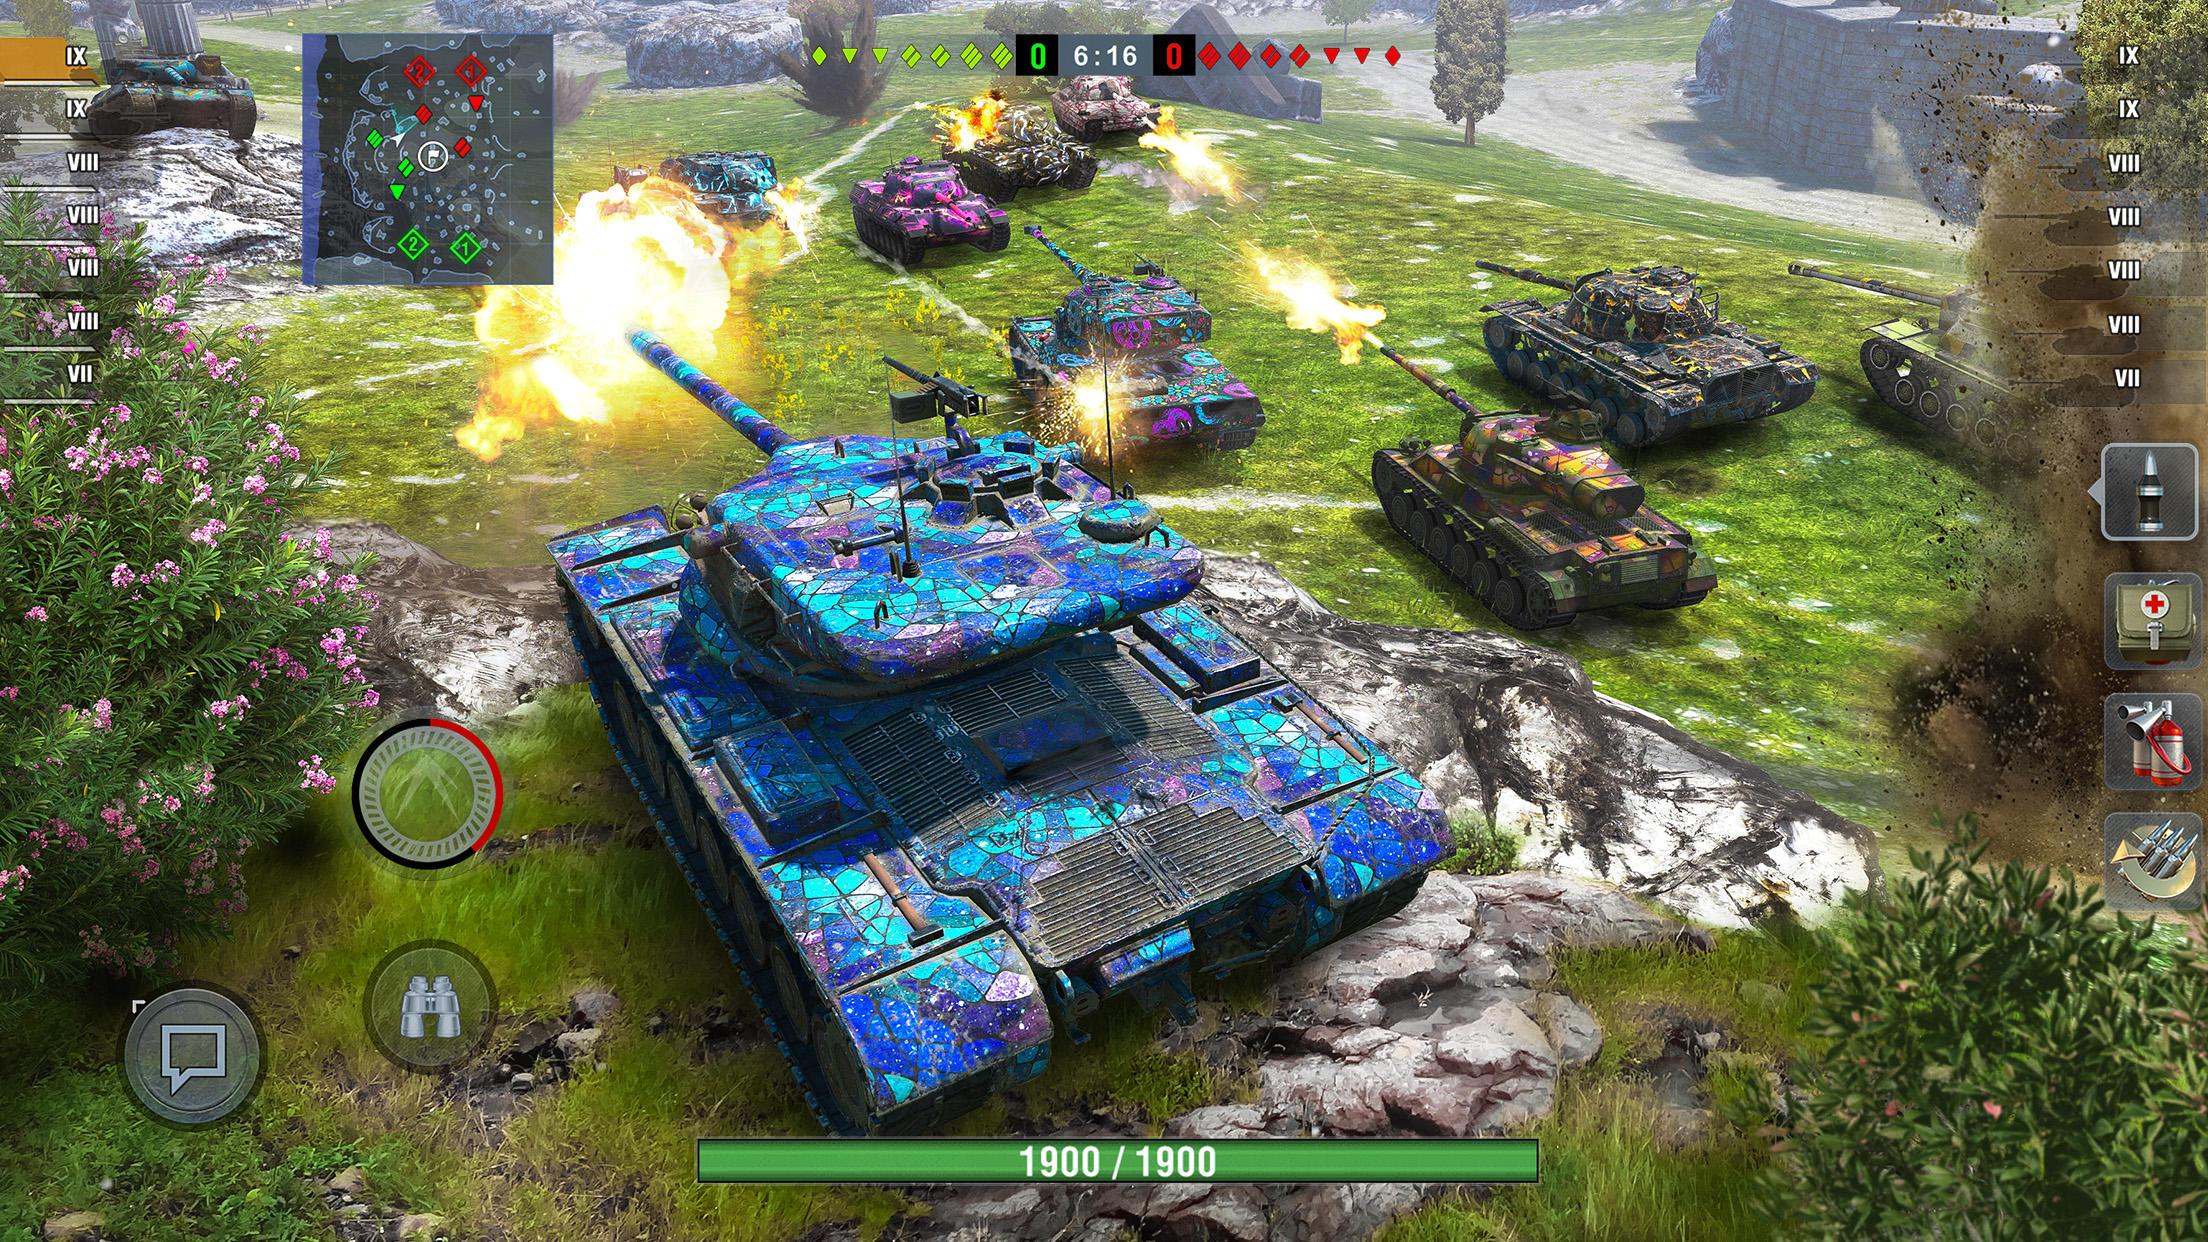 Screenshot 1 of World of Tanks Blitz - PVP MMO 11.0.0.516